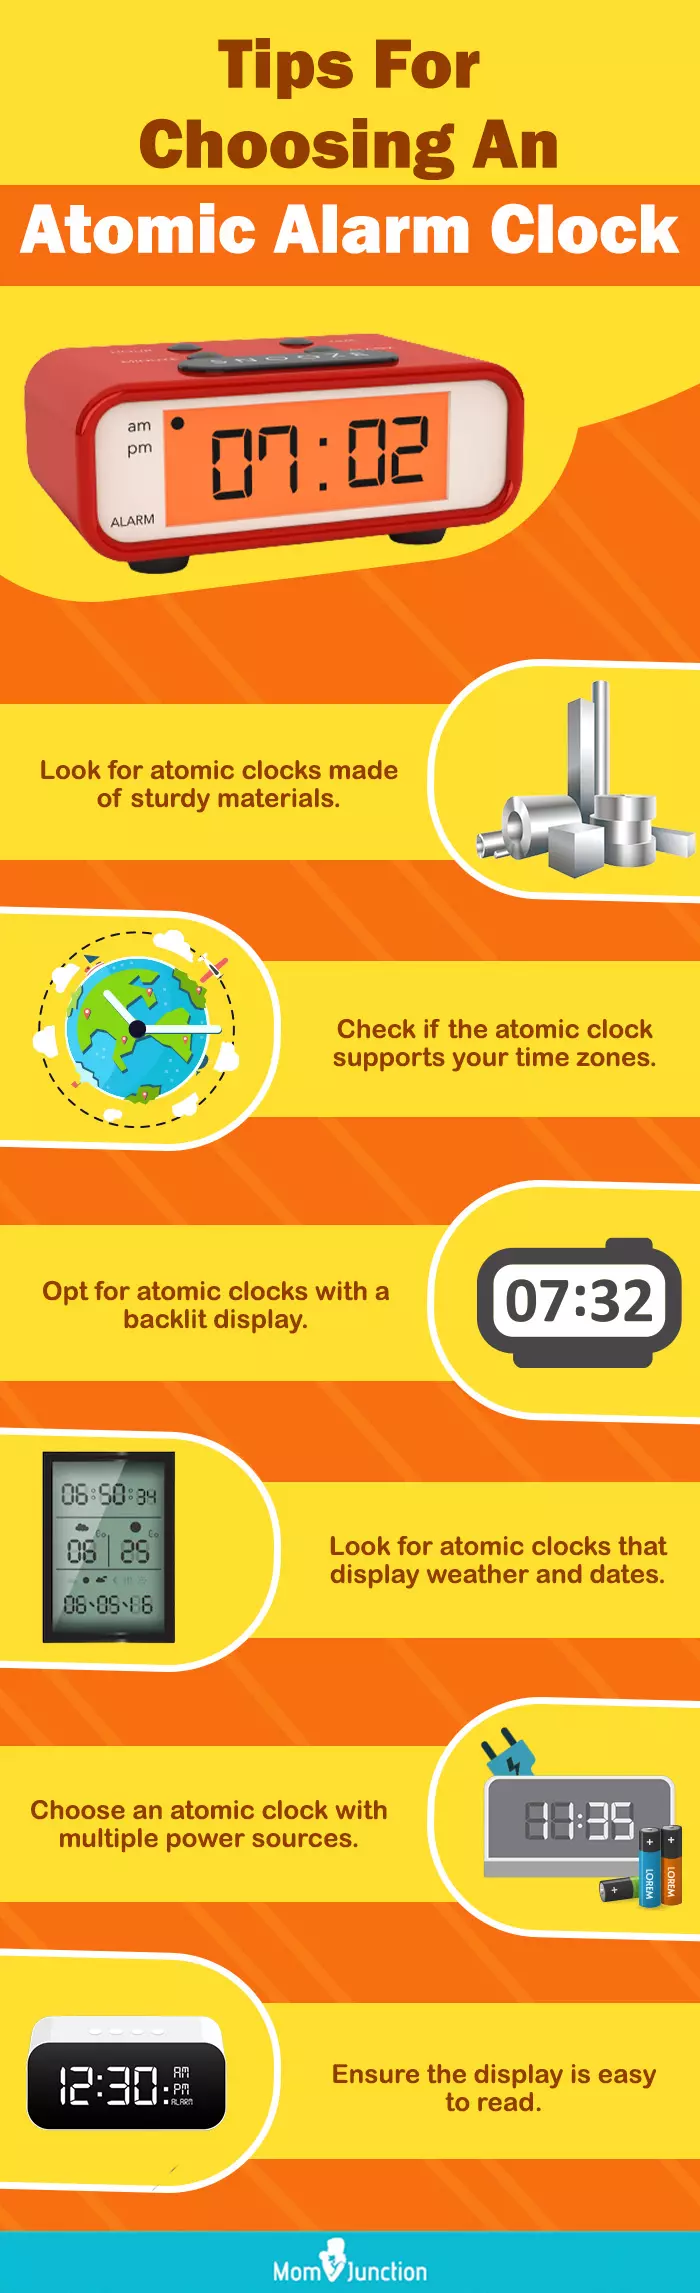 Tips For Choosing An Atomic Alarm Clock